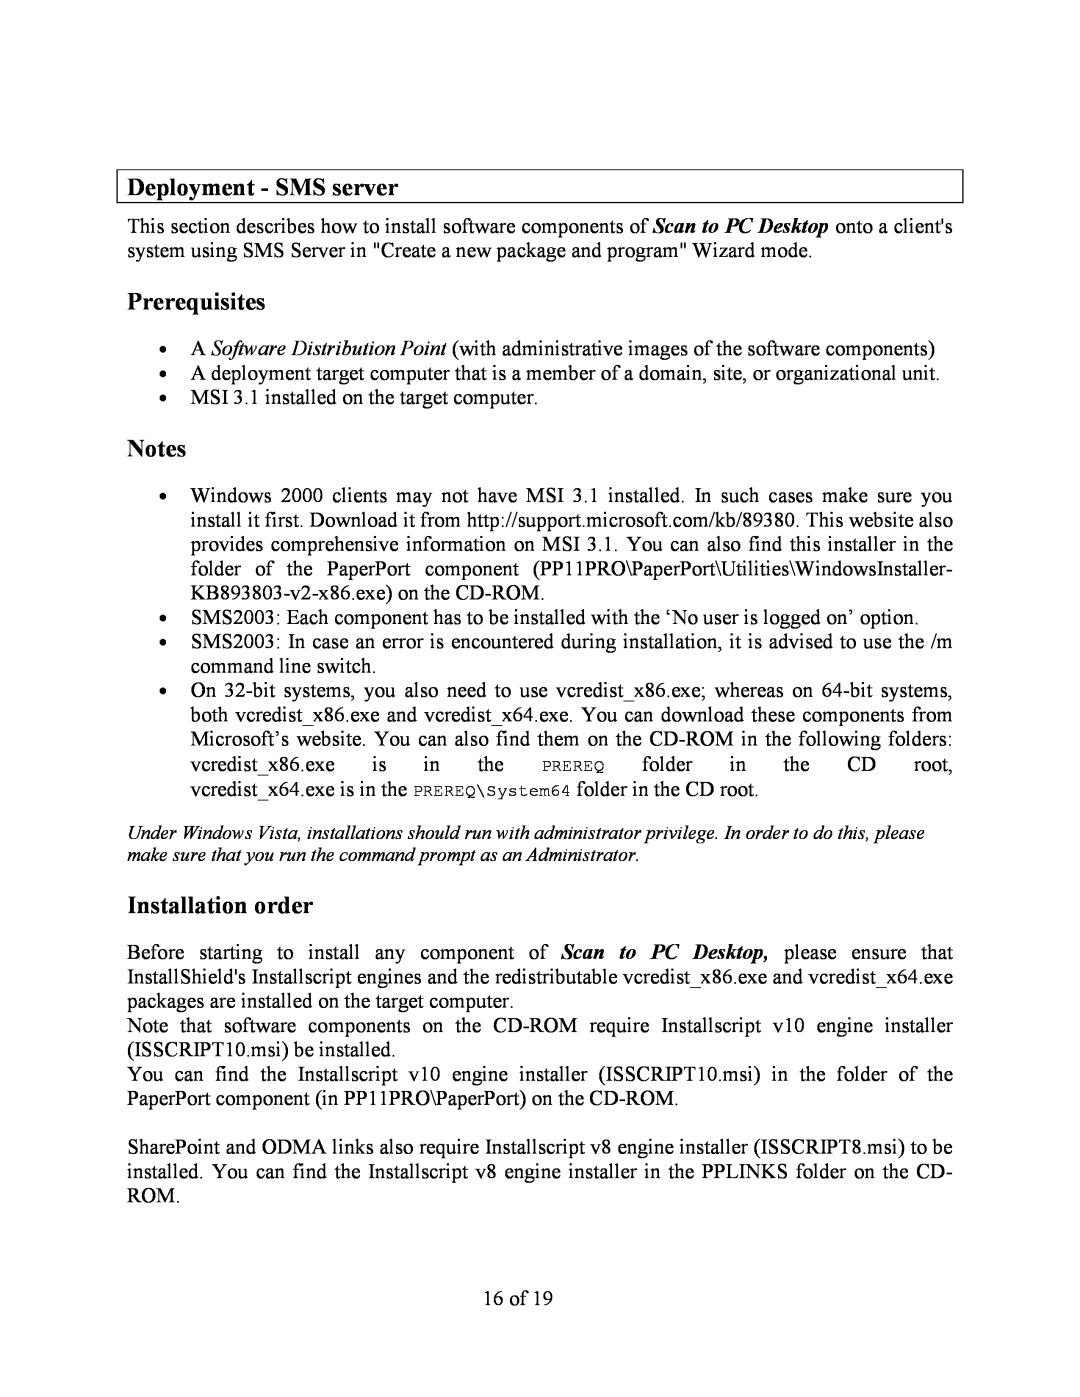 Xerox 10 manual Deployment - SMS server, Prerequisites, Installation order 